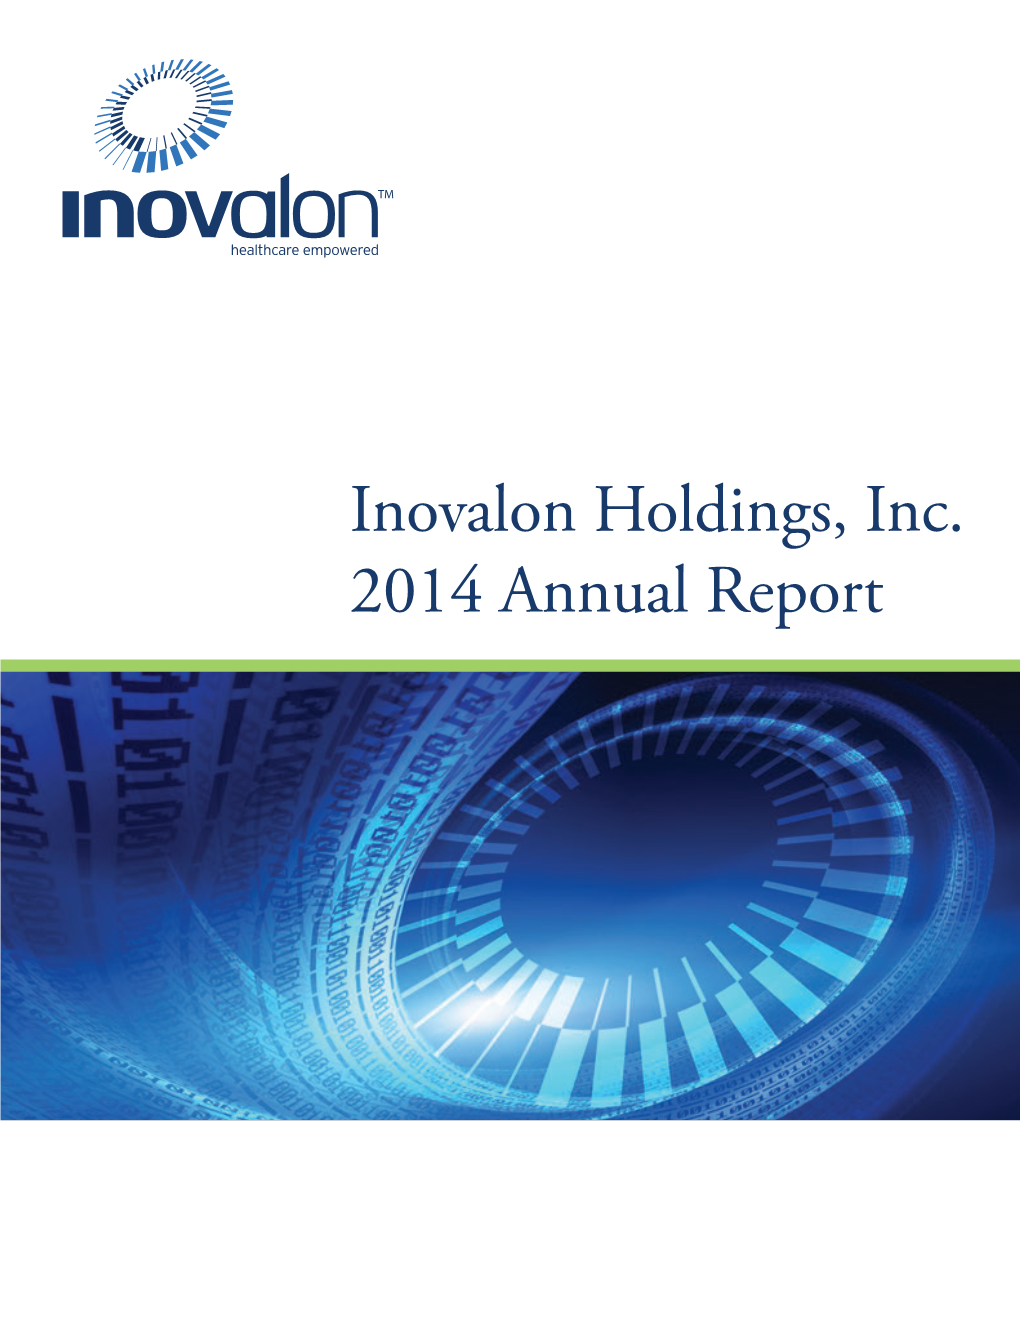 Inovalon Holdings, Inc., 2014 Annual Report